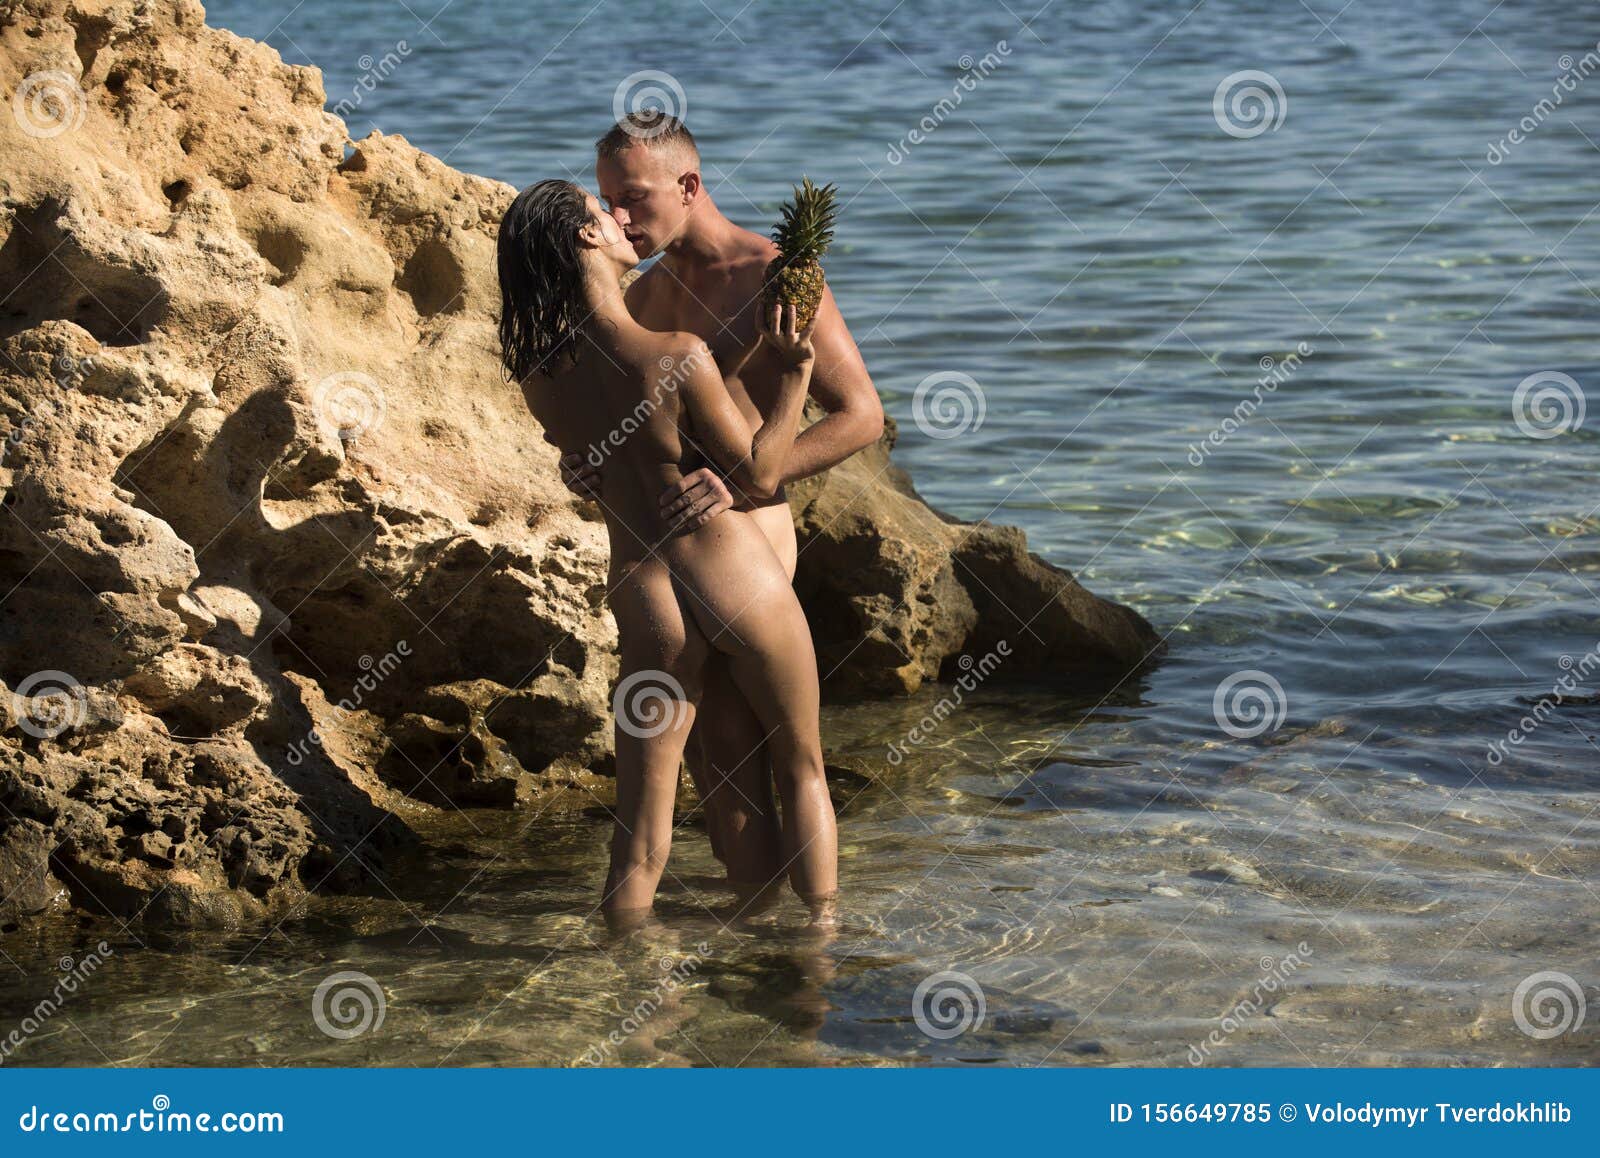 Naked couple enjoying themselves on the beach